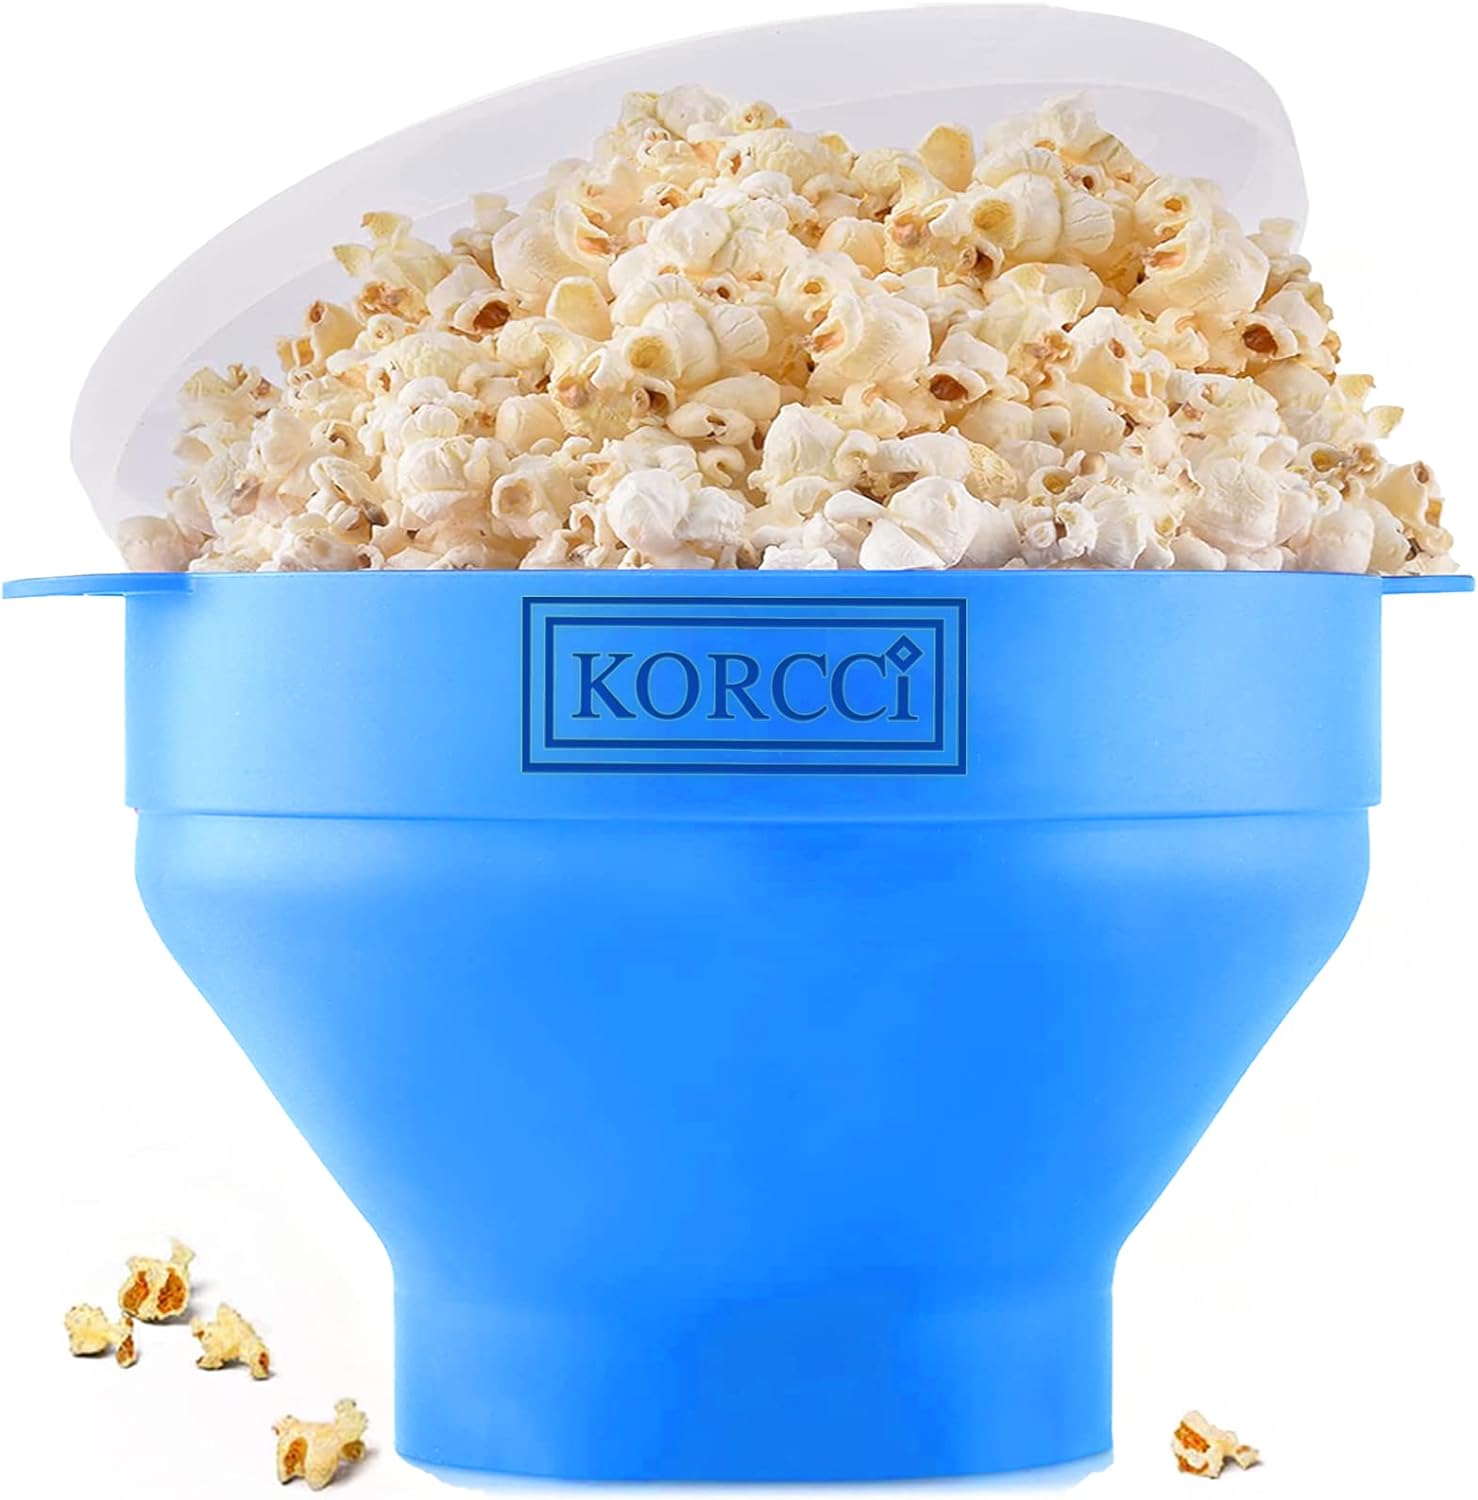 The Original Korcci Microwaveable Silicone Popcorn Popper, BPA Free Microwave Popcorn Popper, Collapsible Microwave Popcorn Maker Bowl, Use In Microwave, Dishwasher Safe (Light Blue)